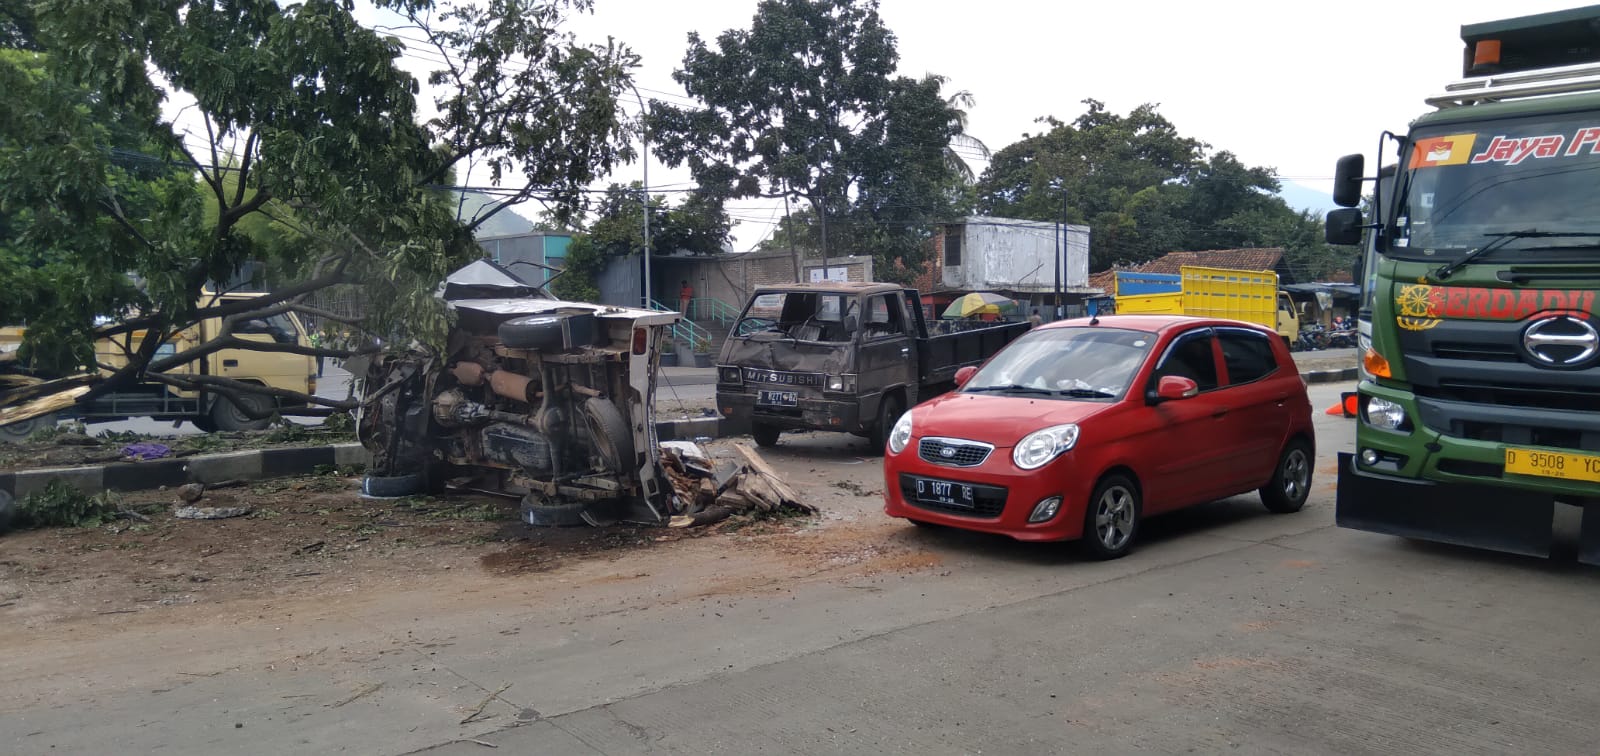 Tampak Mobil Pick Up puting yang mengalami kecelakaan hingga terguling, di jalan Raya Bandung-Garut, KecamatanCimanggung, Sumedang, pada Selasa (1/3)